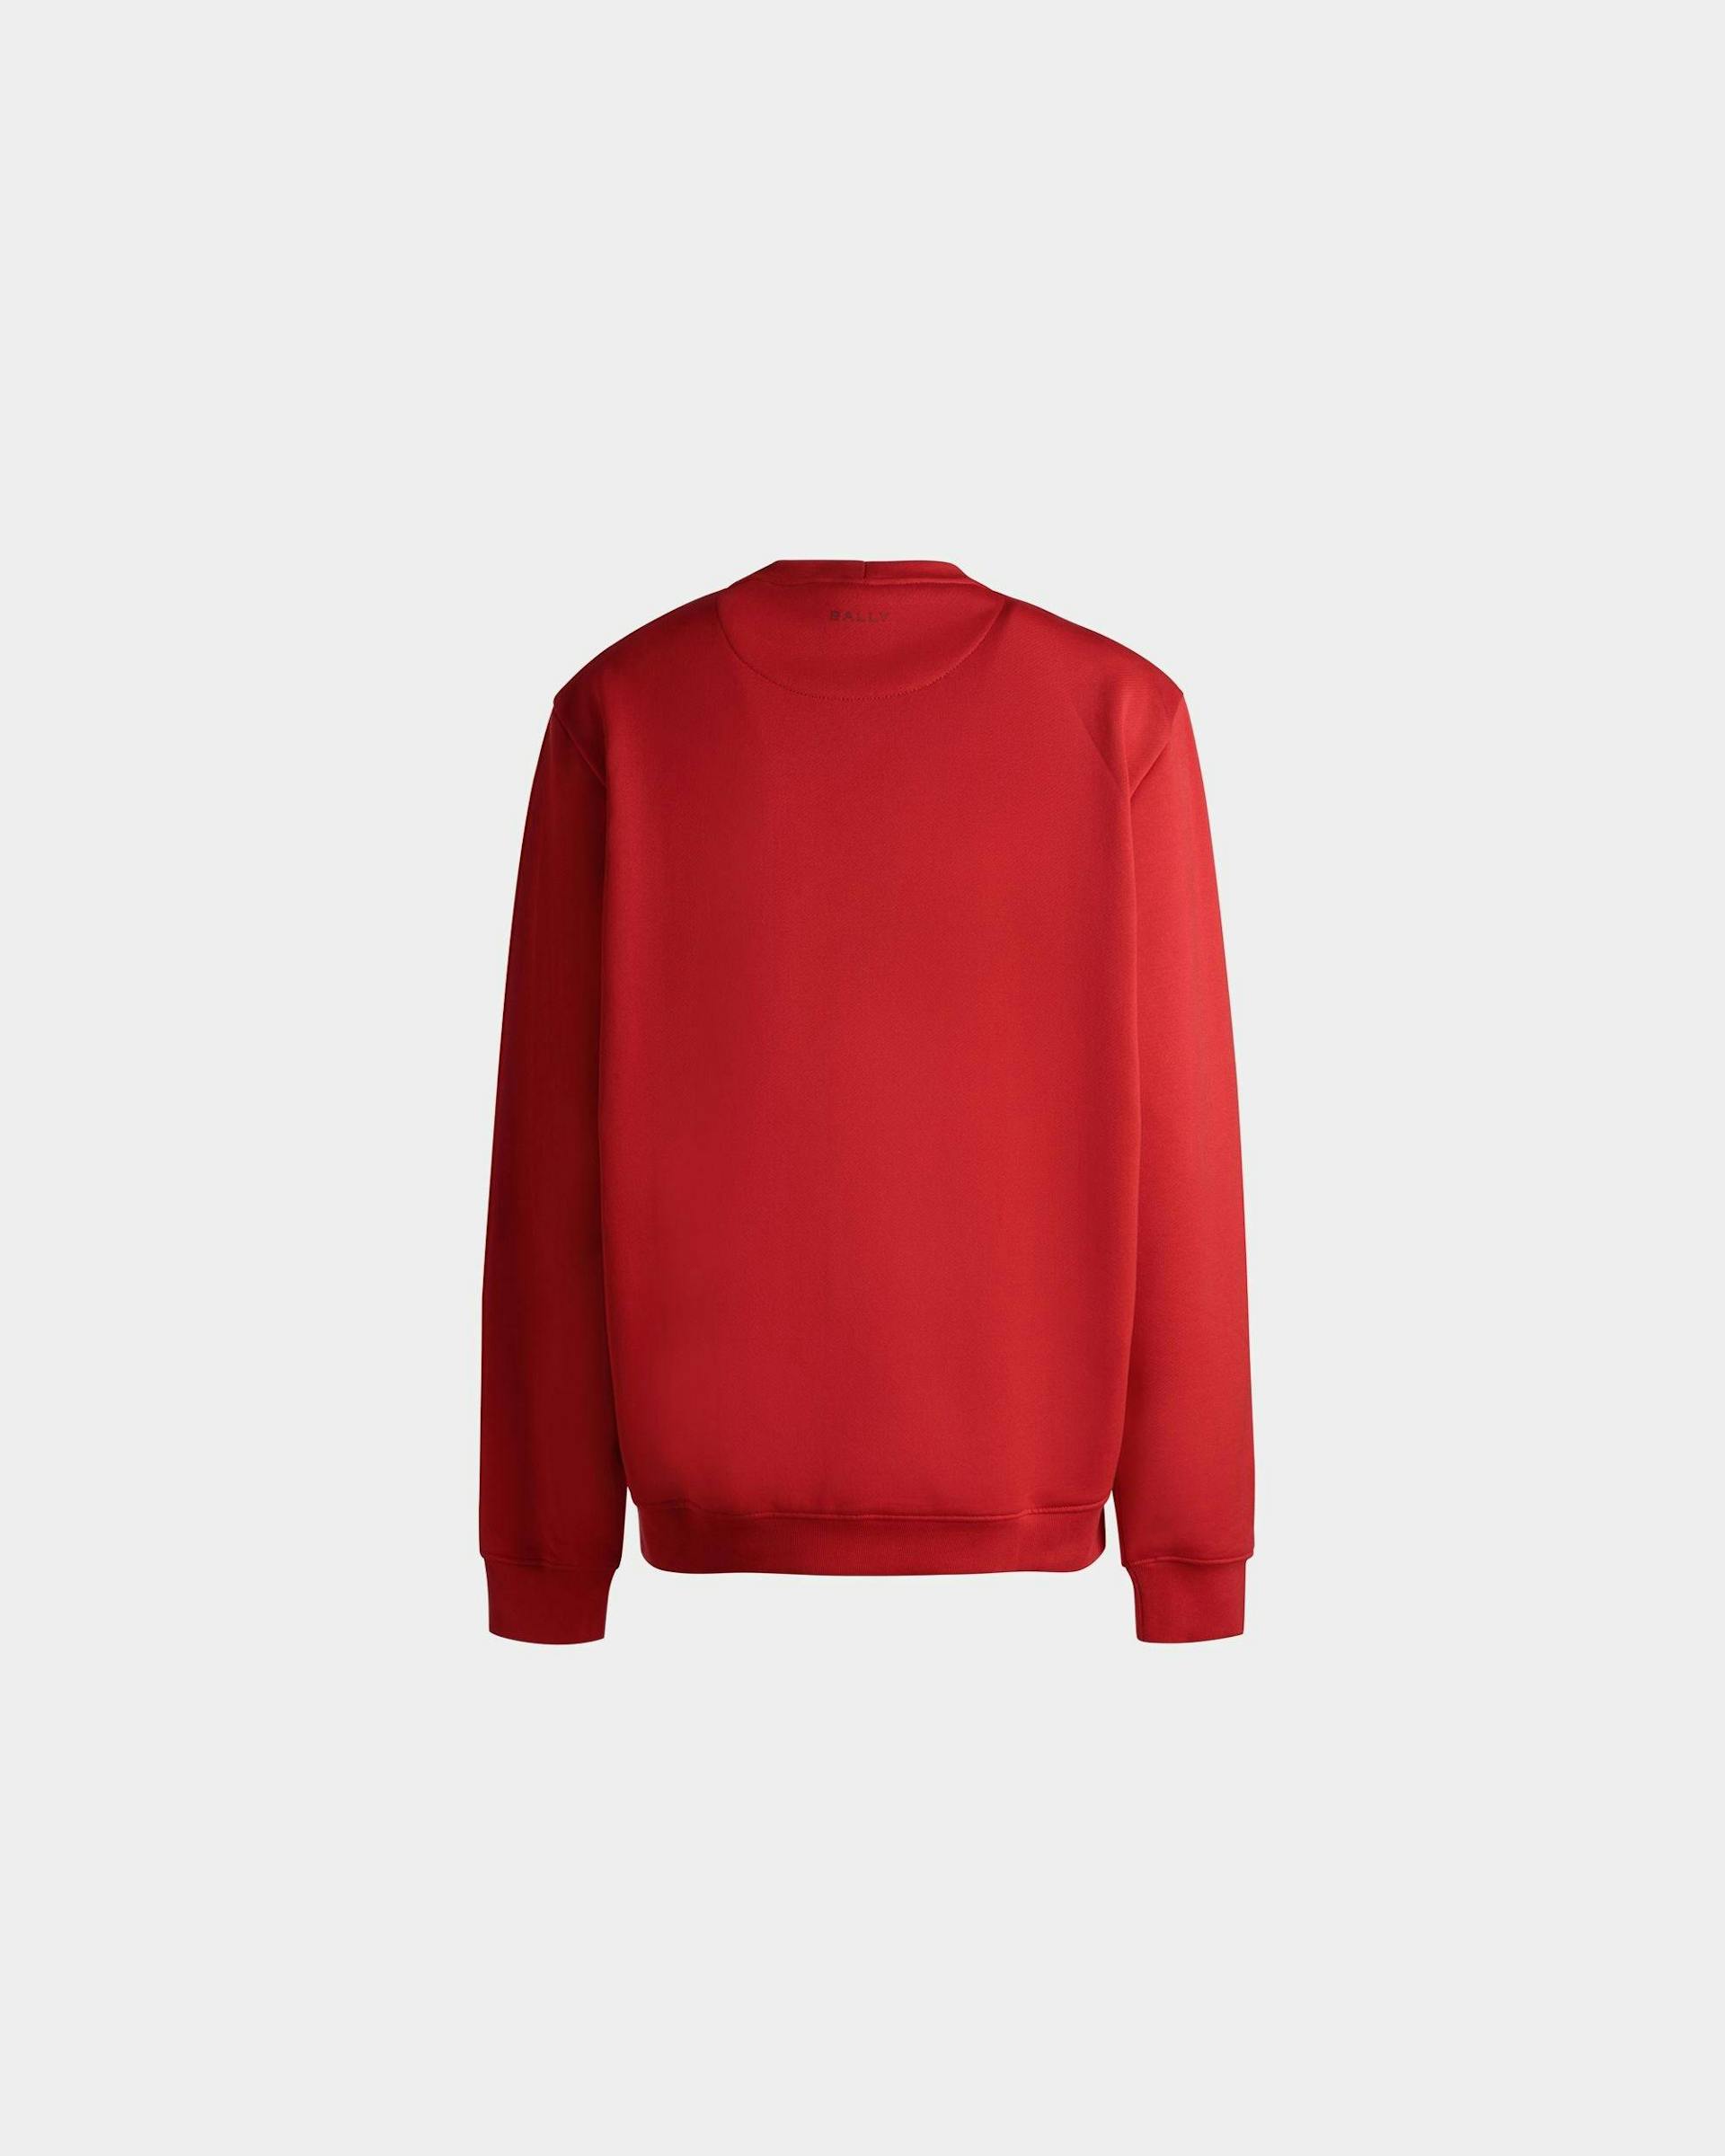 Women's Crewneck Sweatshirt In Red Cotton | Bally | Still Life Back